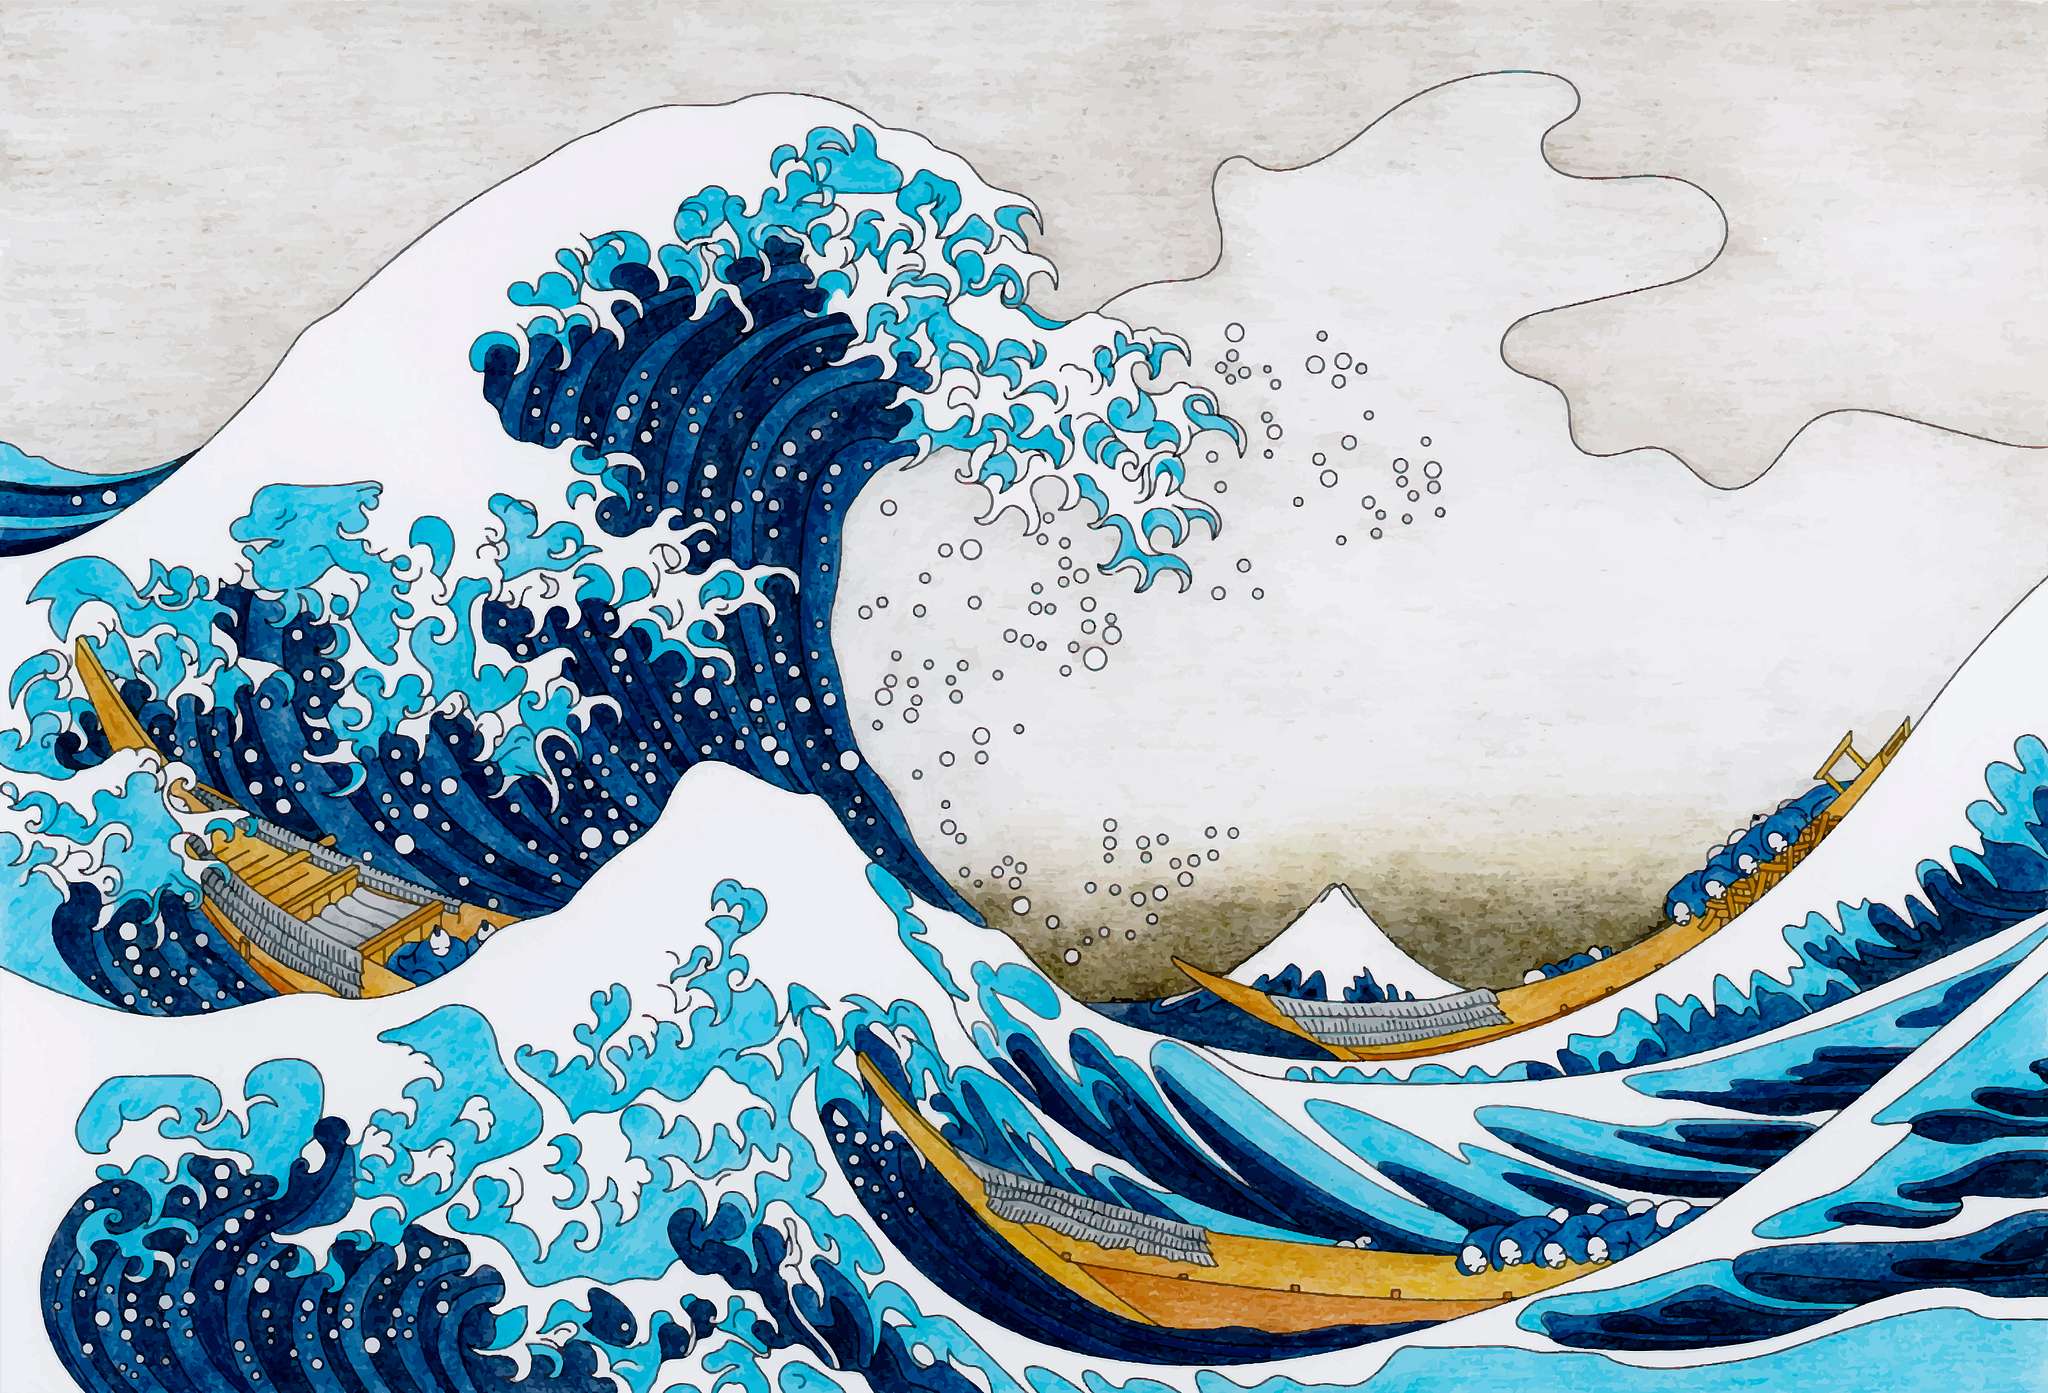 The Great Wave of Kanagawa (18291833) by Katsushika